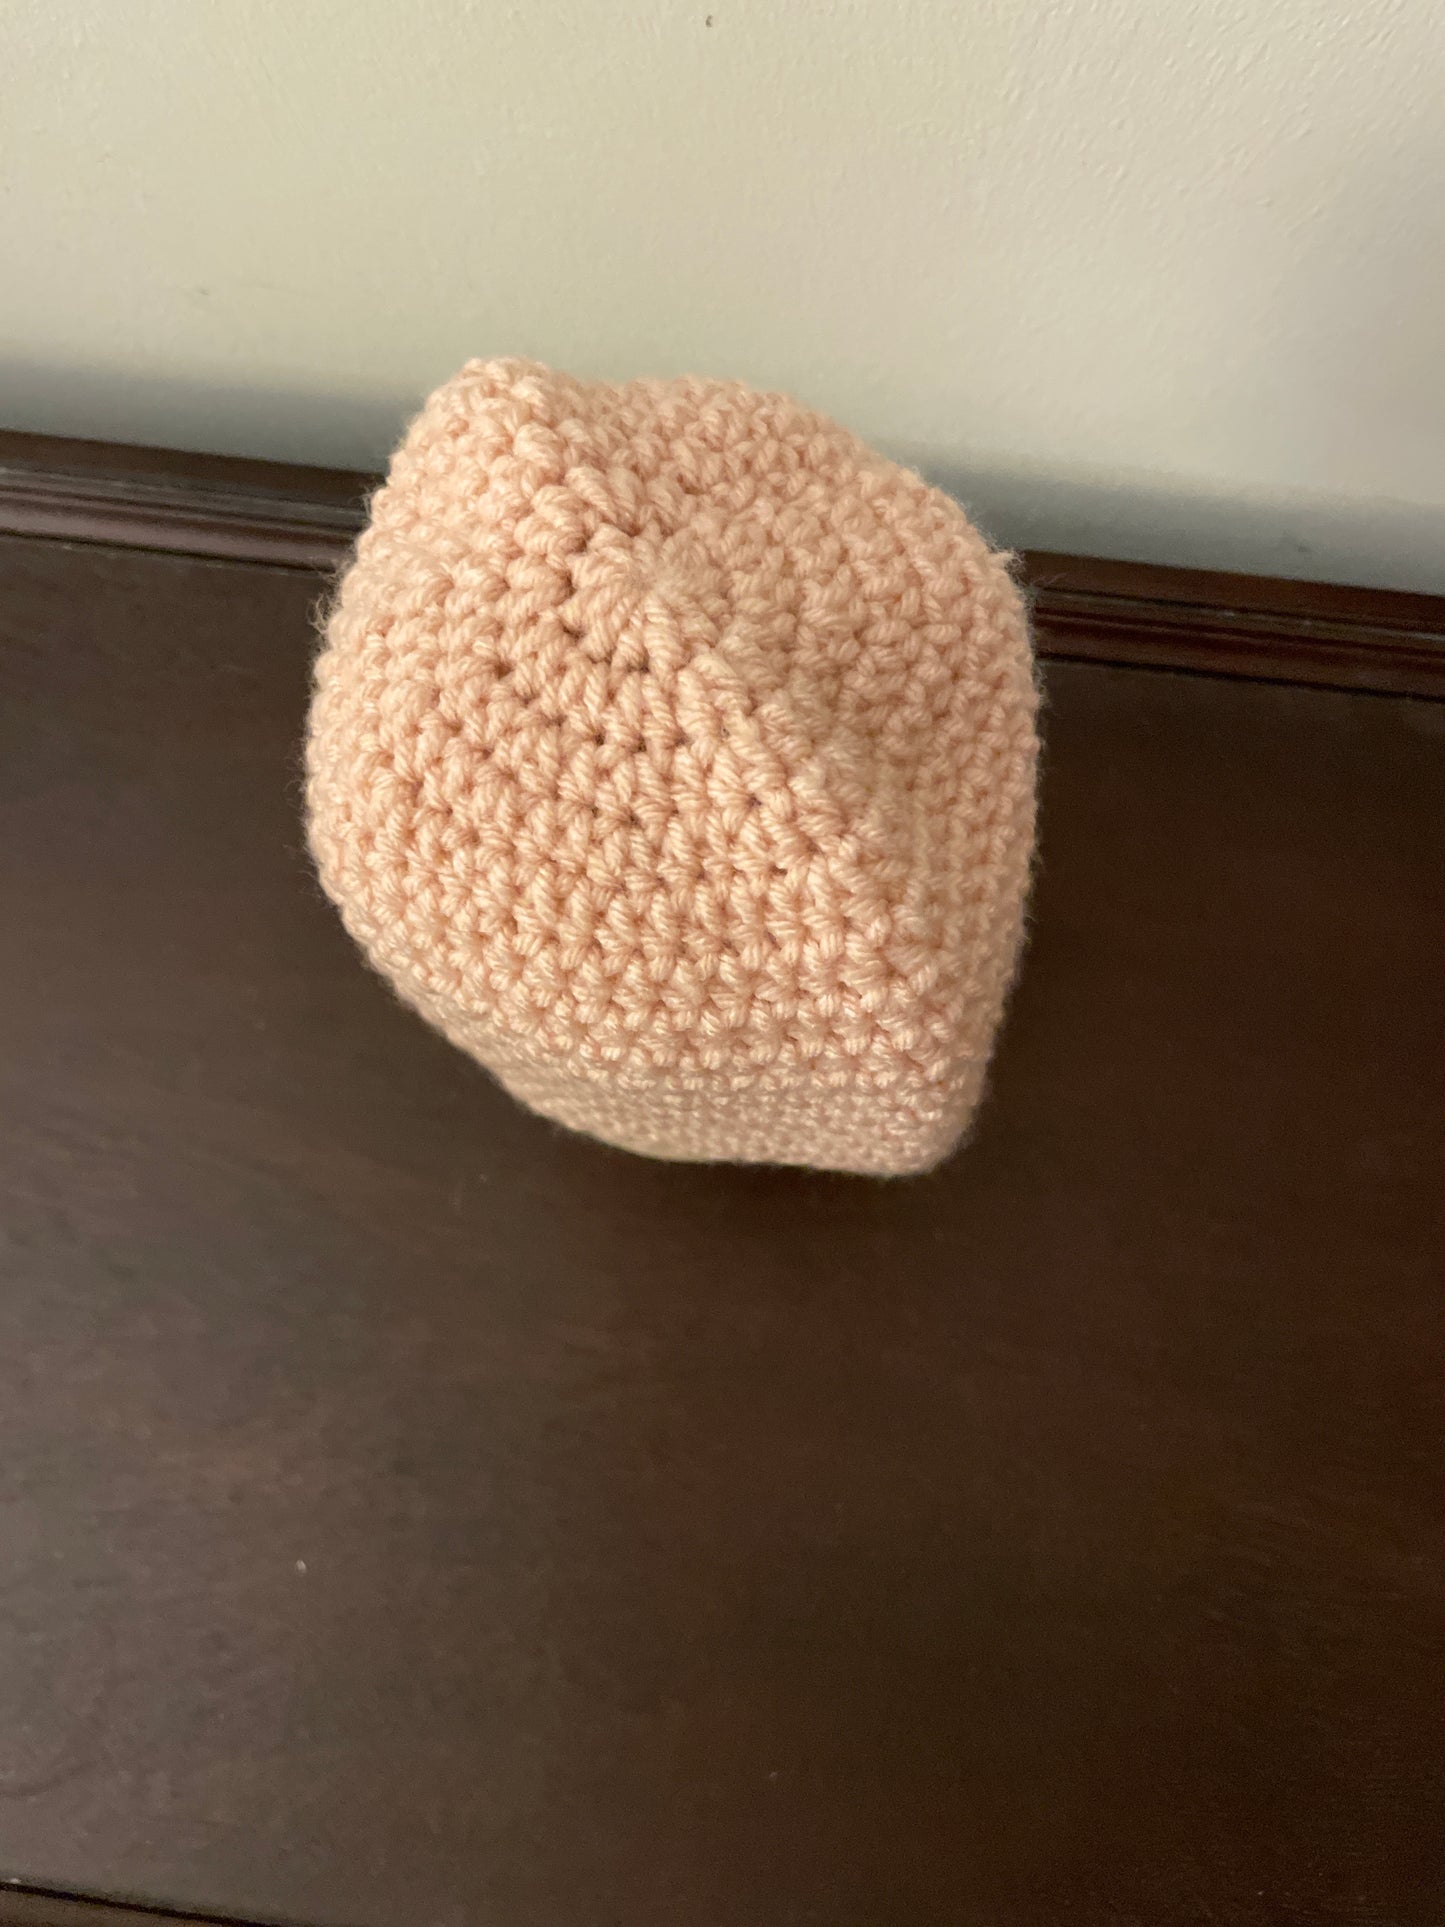 0-3 month old beanie hat